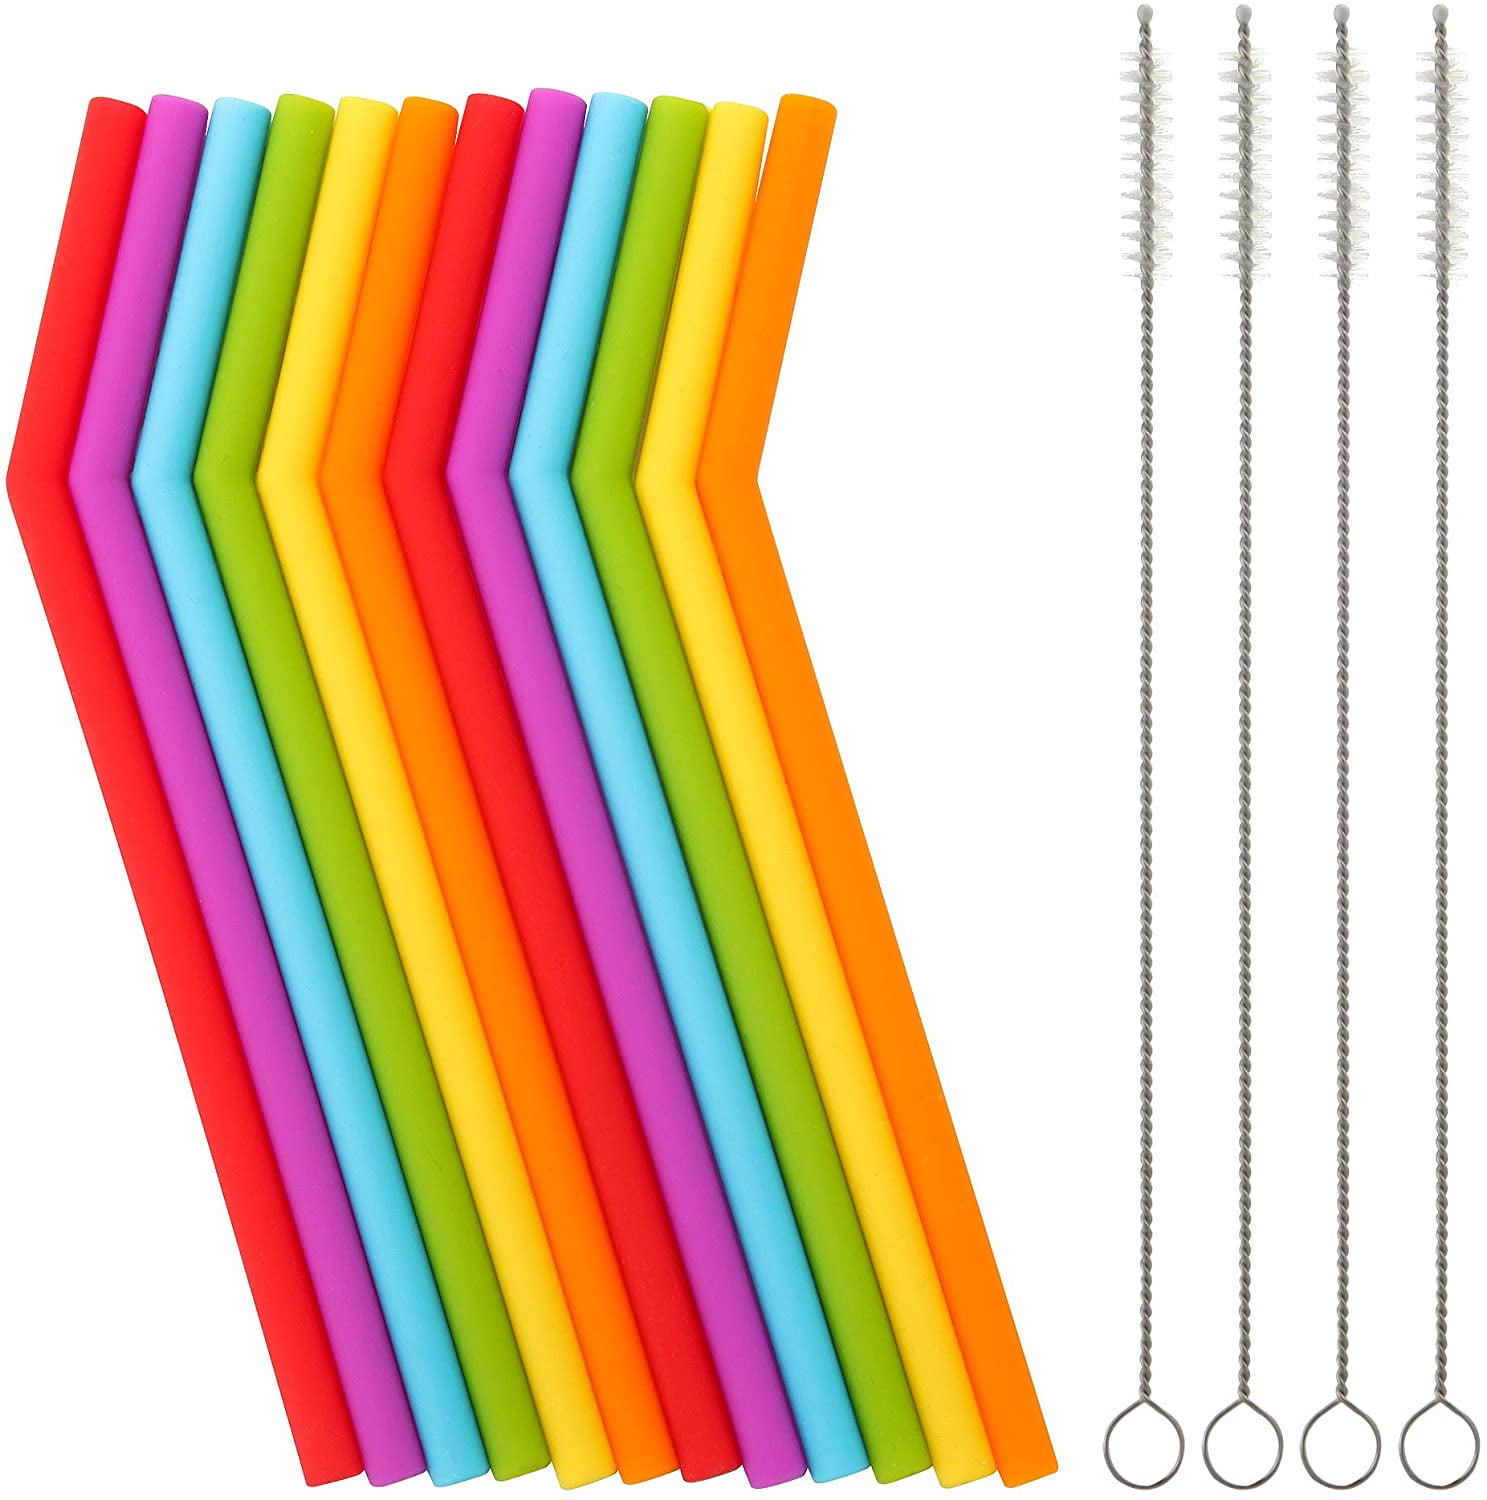  12Pcs Reusable Plastic Straws Colorful Plastic Straws